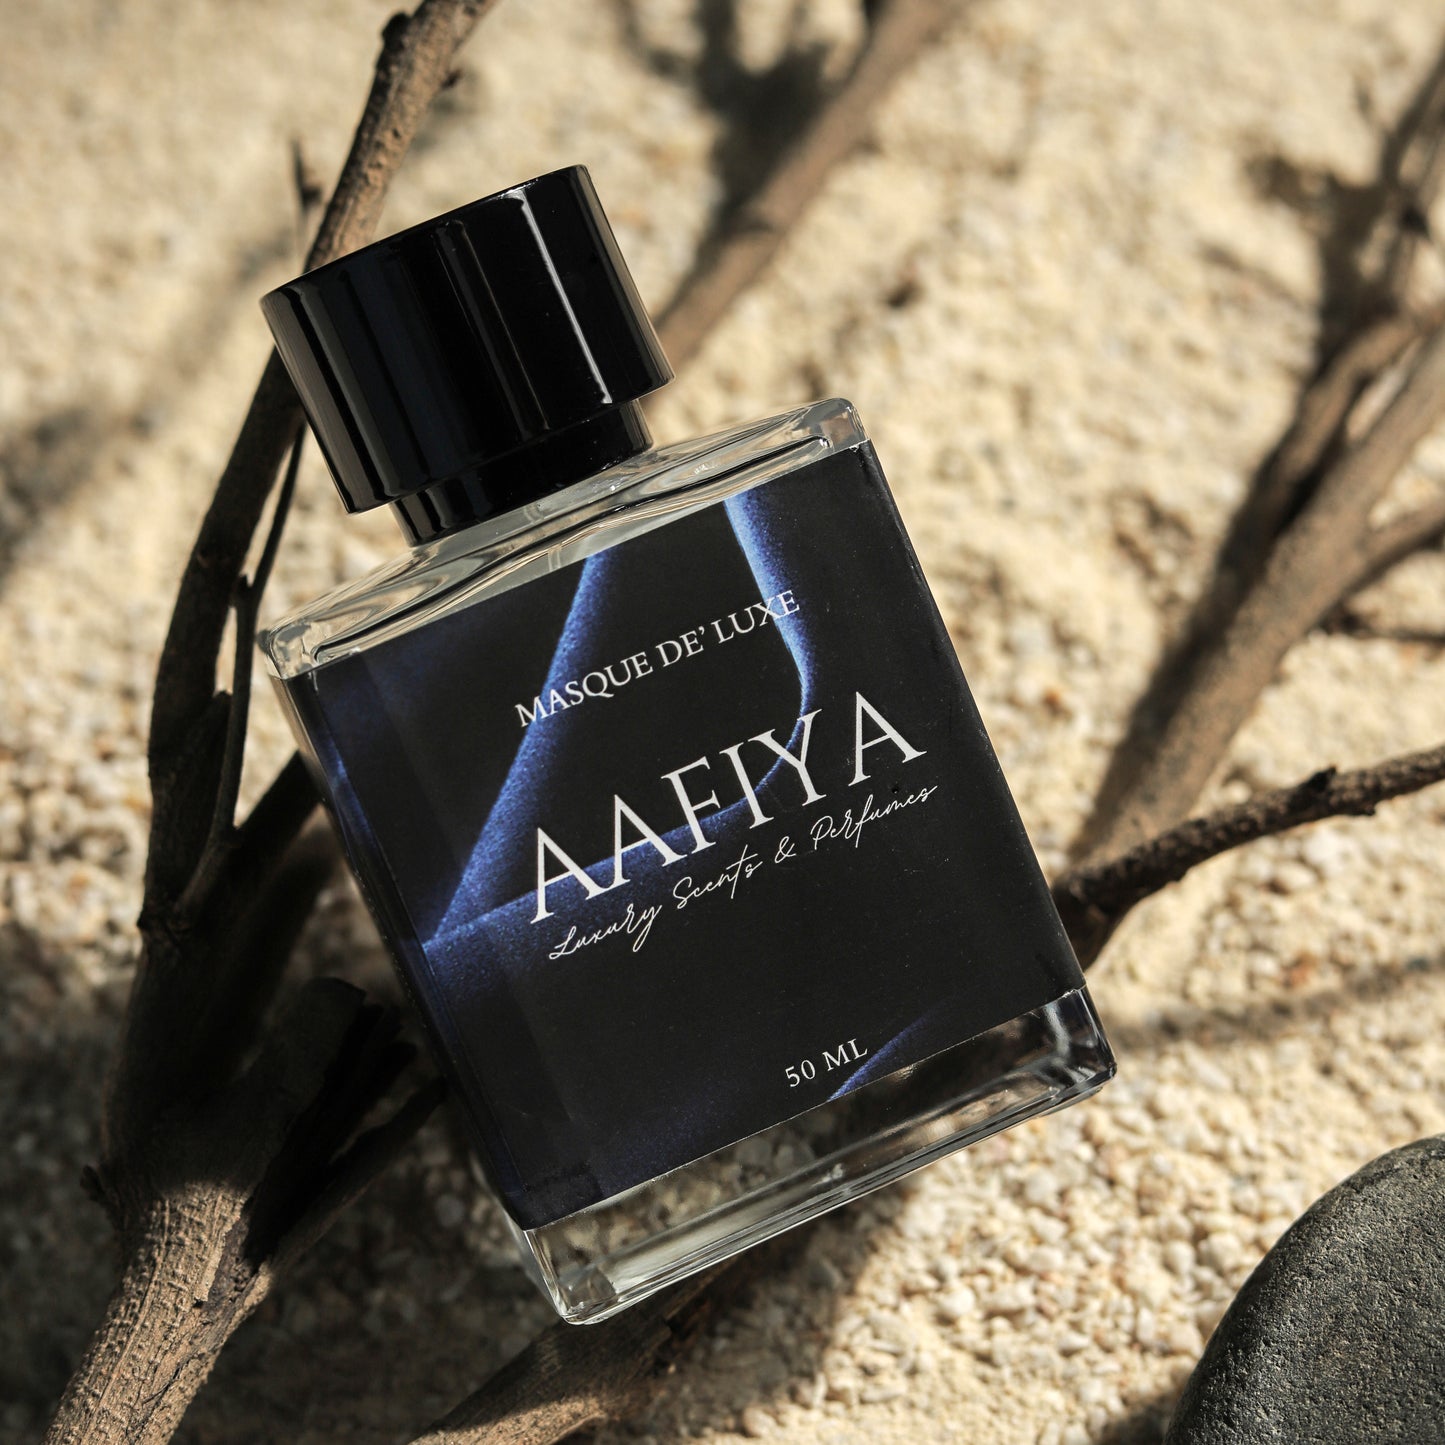 Masque De'Luxe Aafiya Luxury Scents & Perfumes